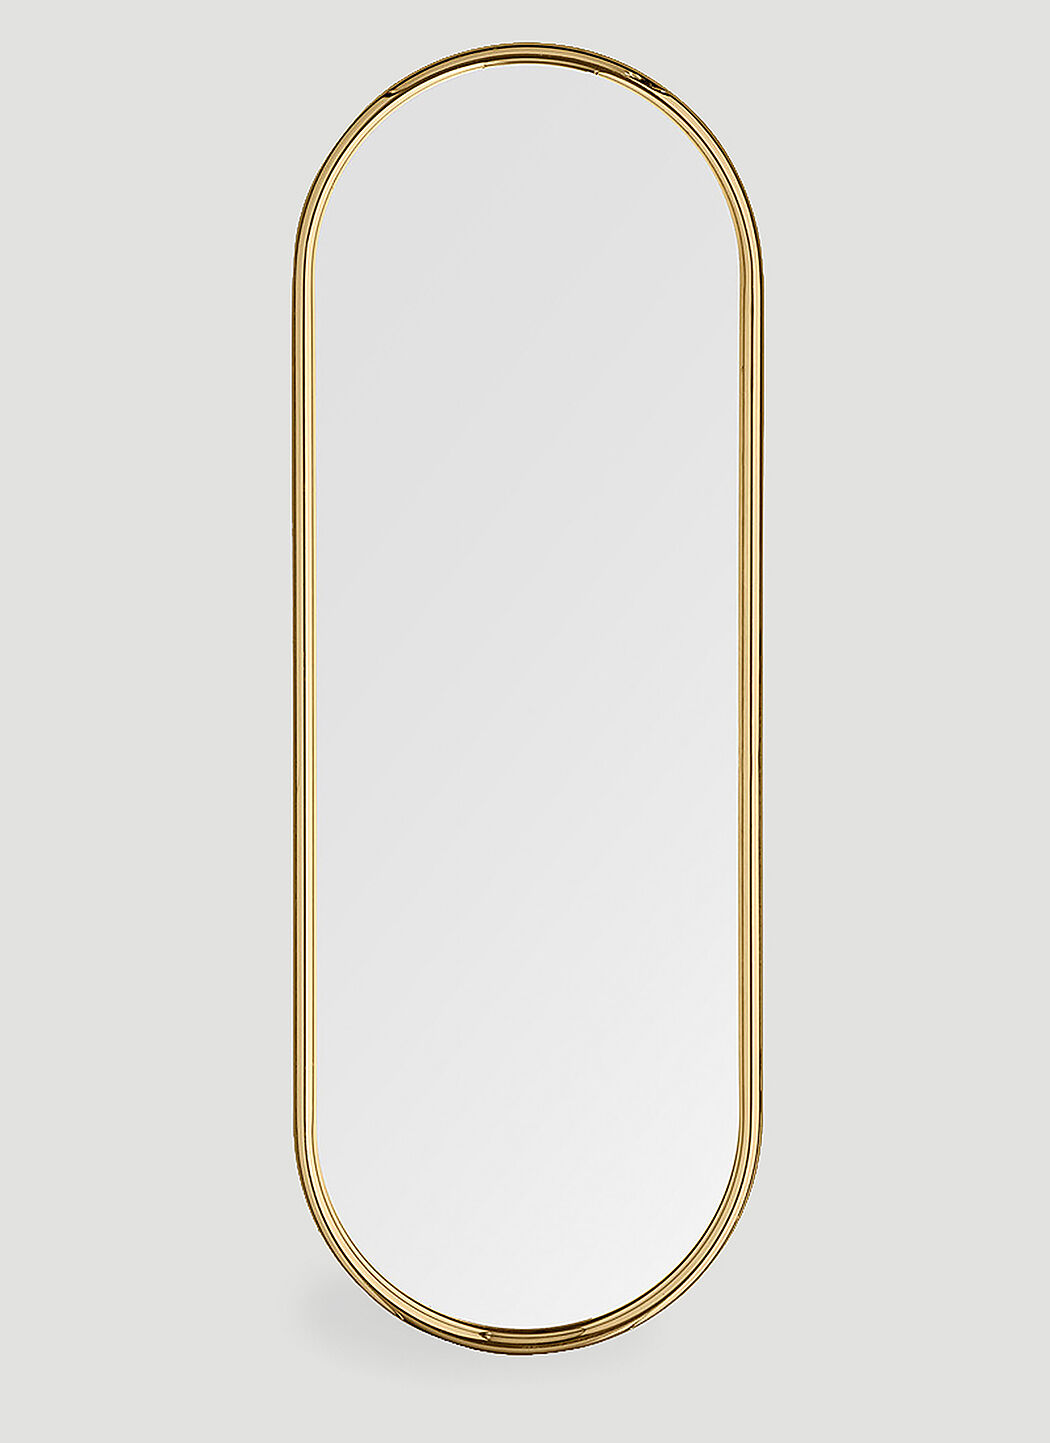 Marloe Marloe Large Angui Mirror 크림 rlo0351006